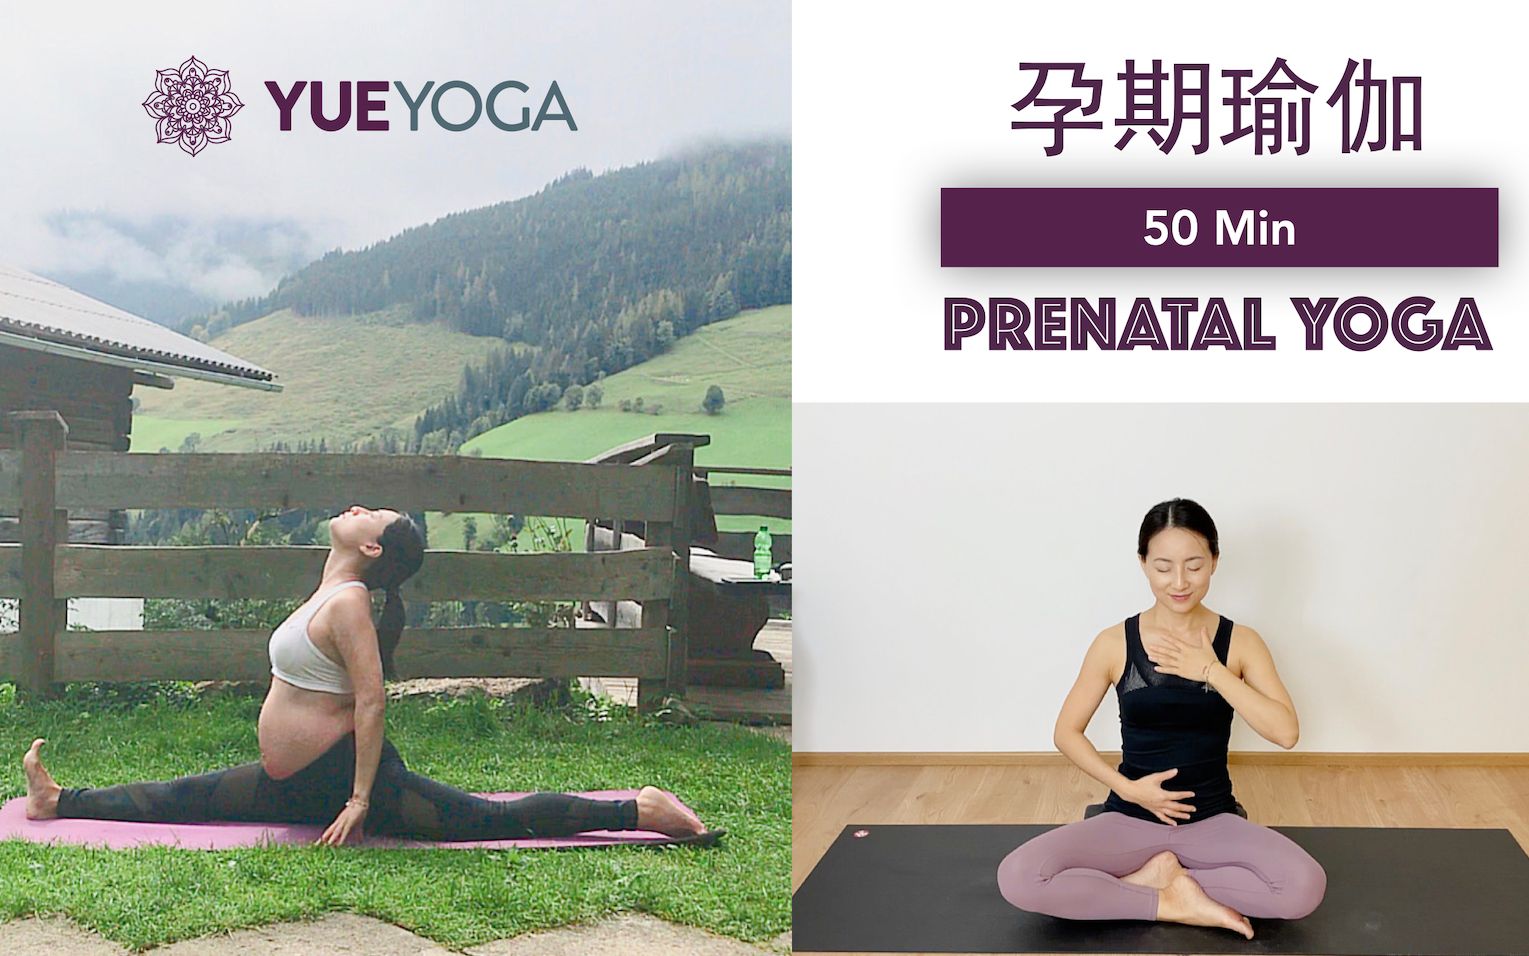 【50分钟孕妇瑜伽】疏解孕期身心压力 促进安全分娩及产后恢复 50min Gentle Prenatal Yoga | Yue Yoga